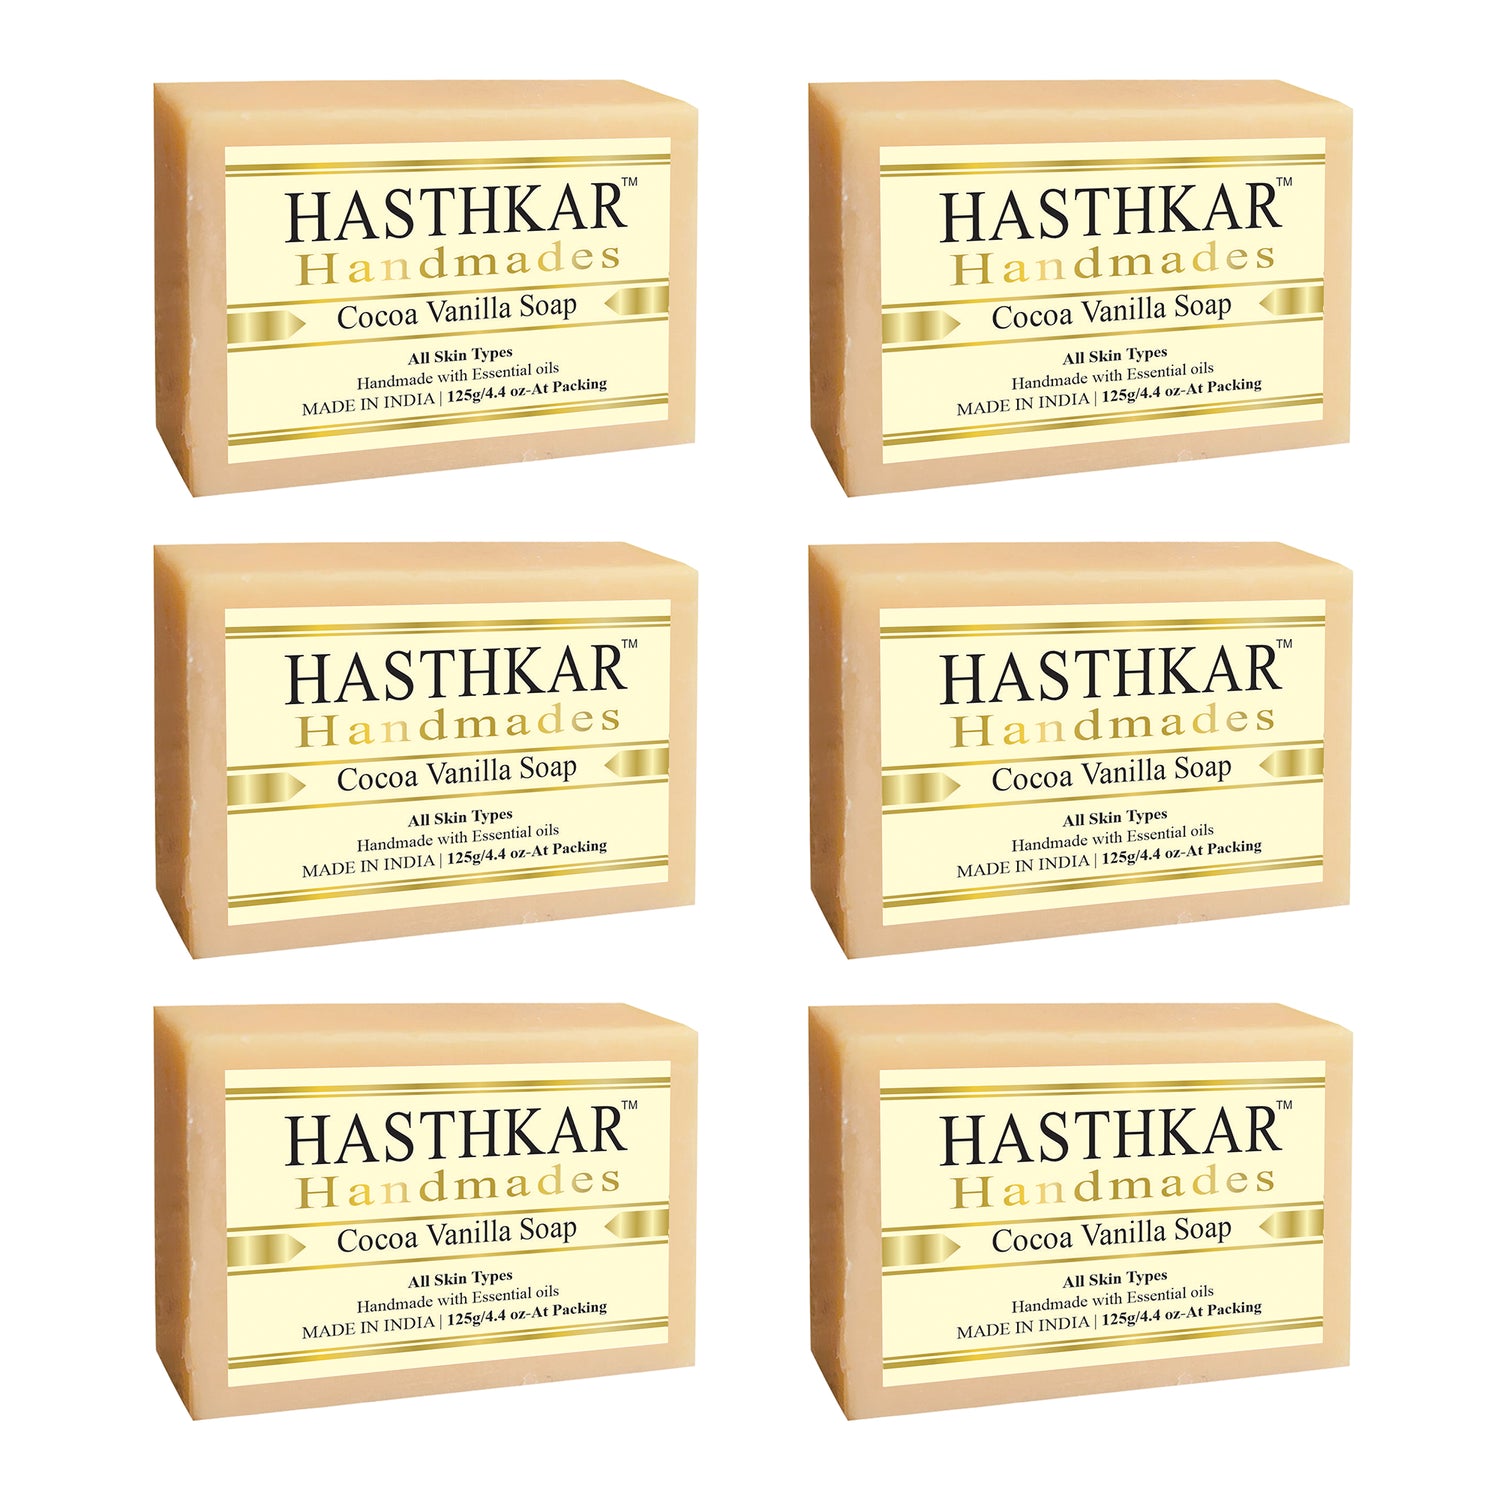 Hasthkar handmades cocoa vanilla bathing soap men women pack of 6